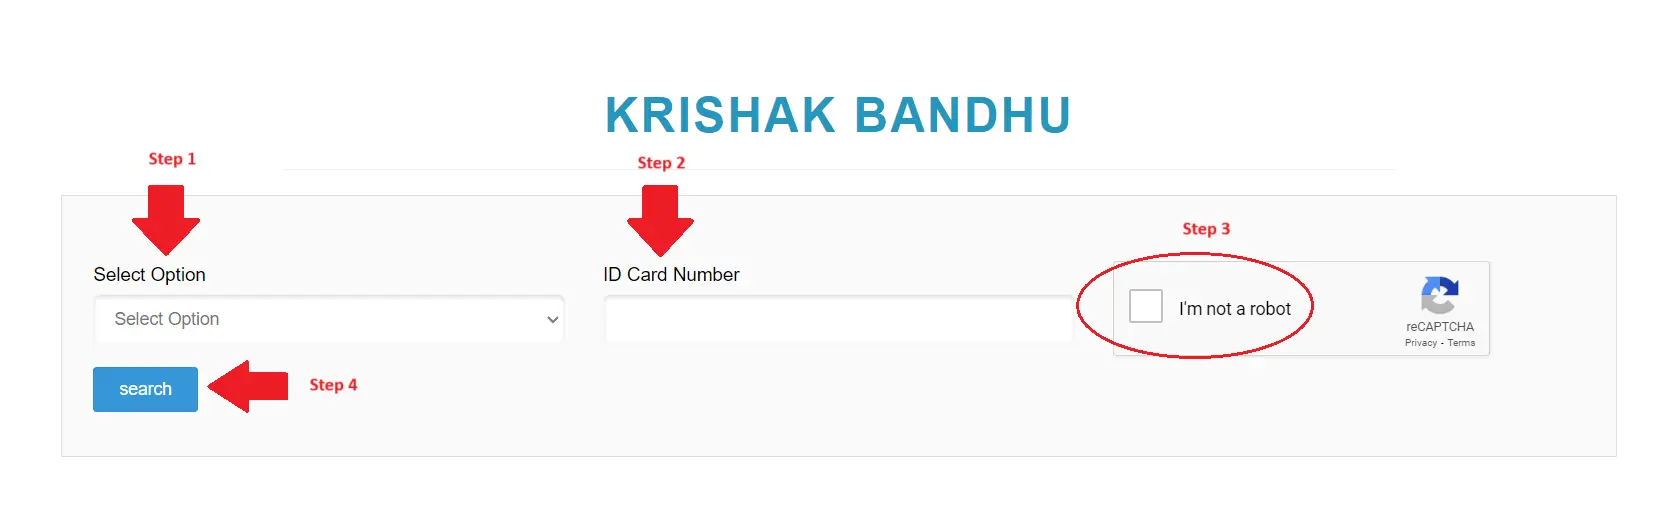 Krishak Bandhu Status